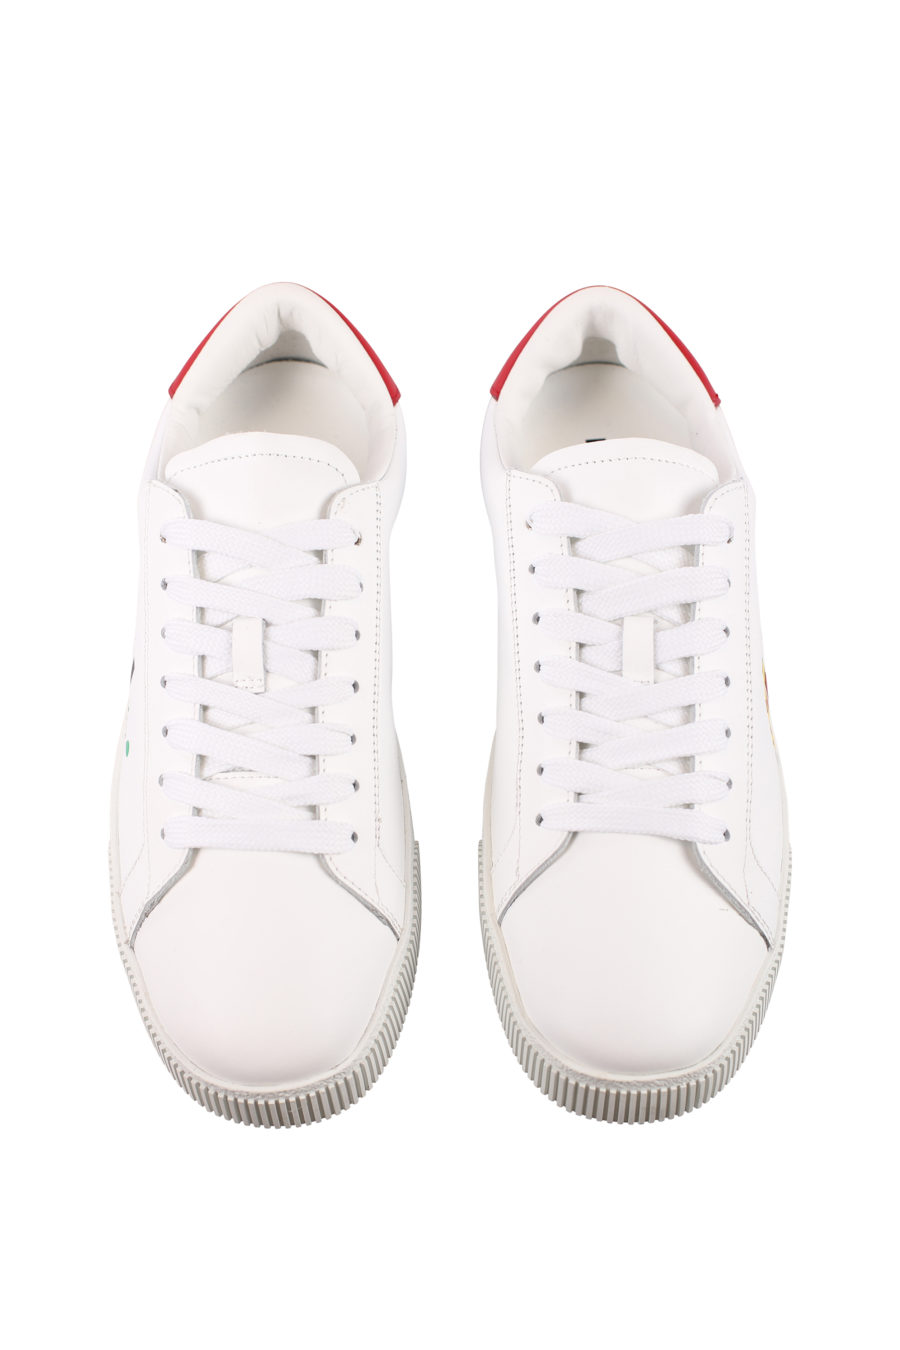 White trainers with "icon splash" logo - IMG 0716